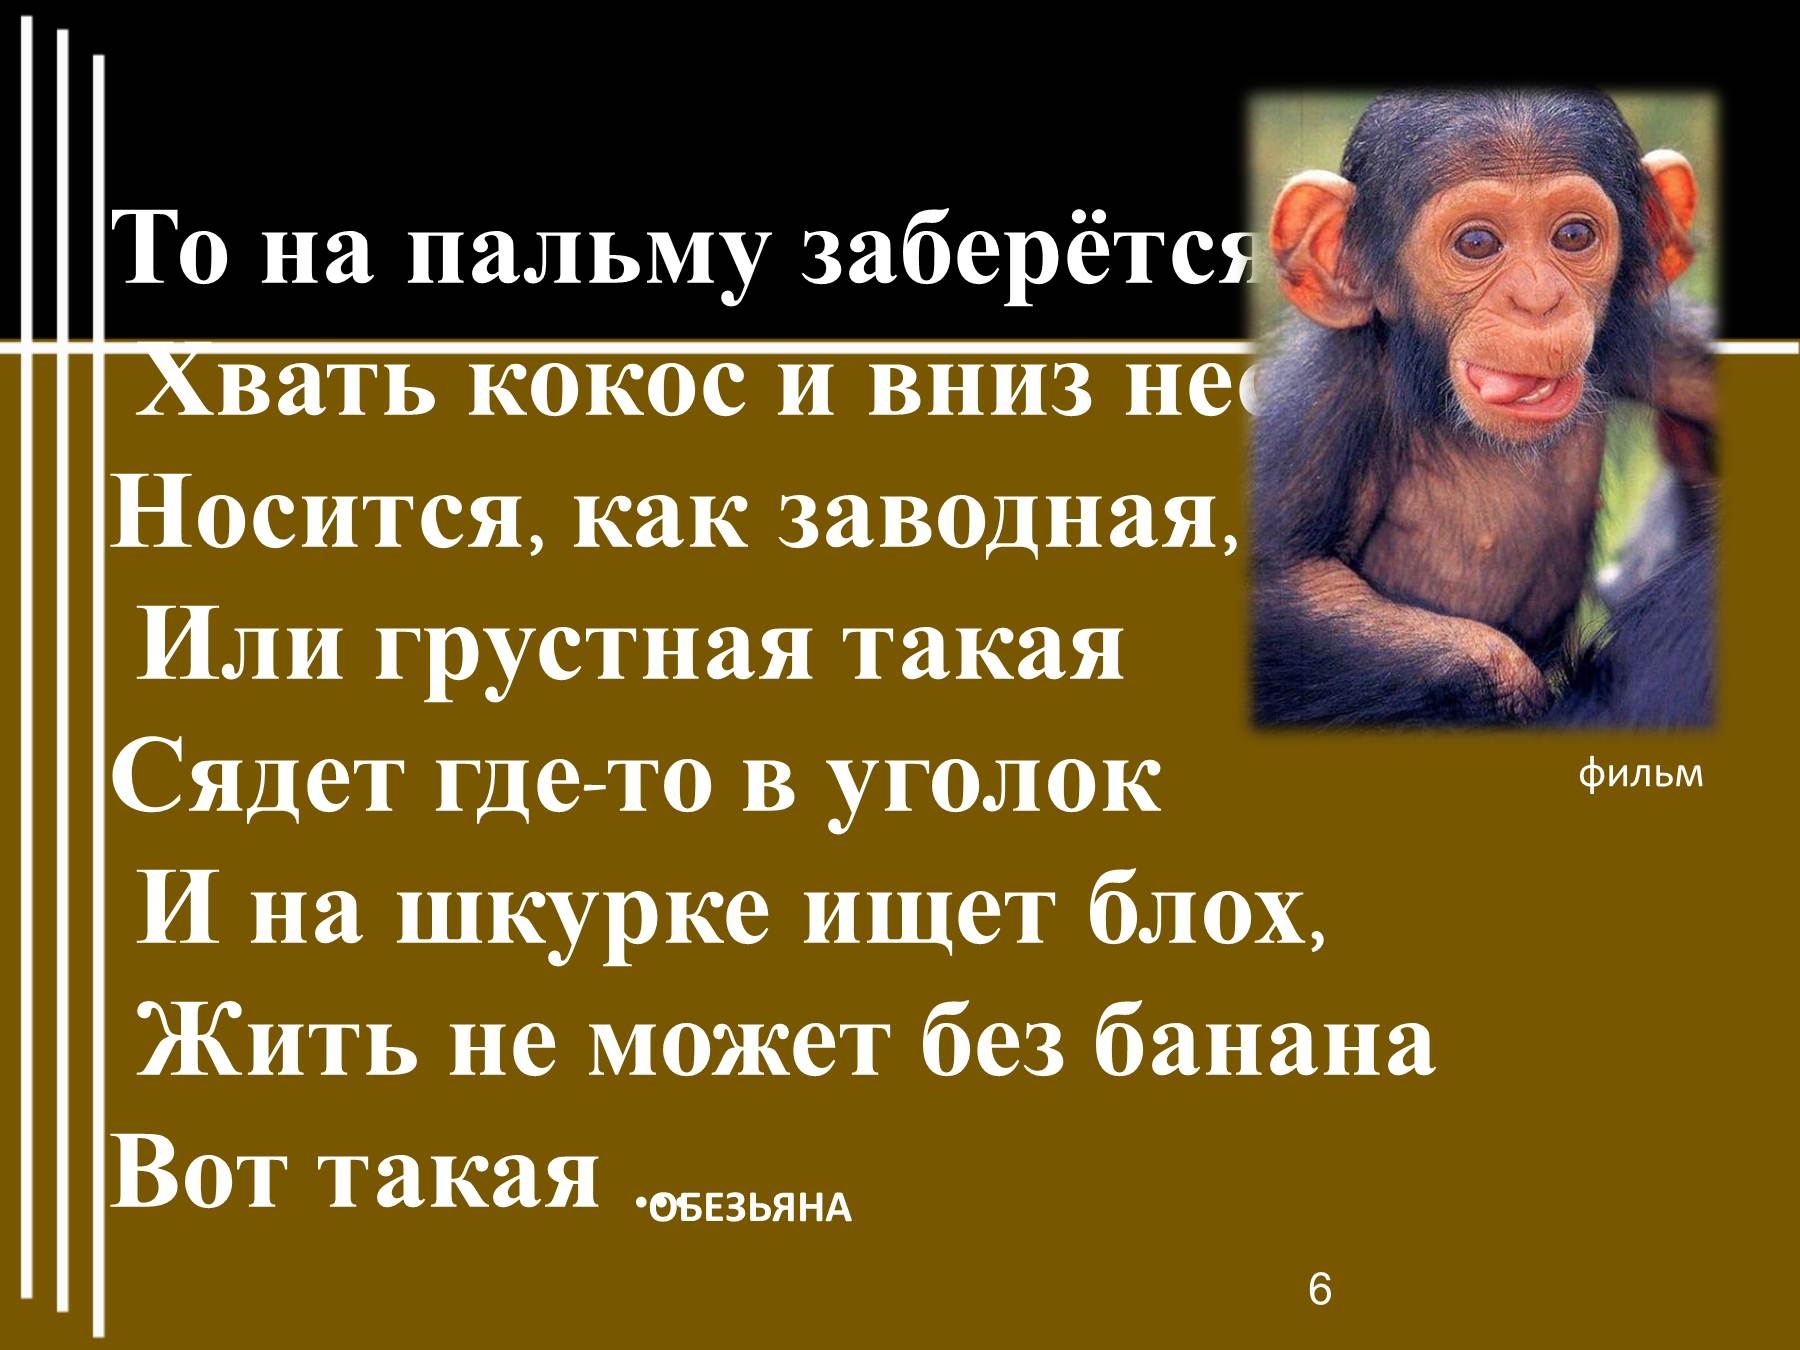 Описание обезьянки из рассказа житкова про обезьянку. Про обезьянку 3 класс. Житков про обезьянку. Предложение про обезьяну. Рисунок к рассказу про обезьянку.